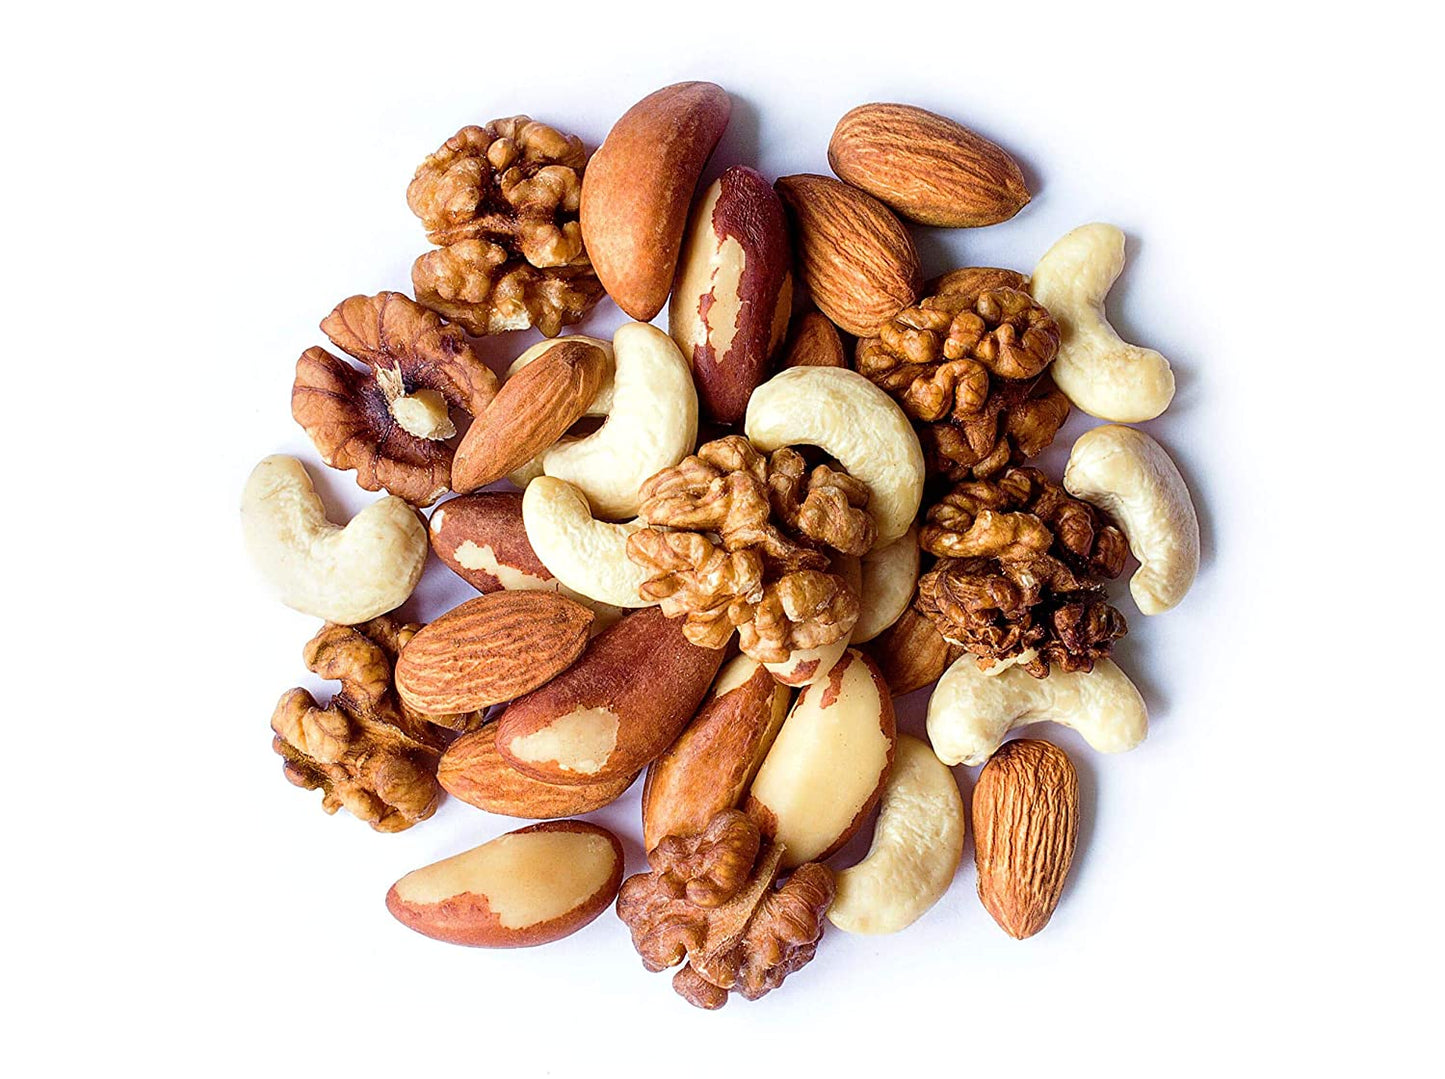 Organic Mixed Raw Nuts - Cashews, Brazil Nuts, Walnuts, Almonds, Non-GMO, Kosher, Raw, Vegan, Unsalted, Bulk - by Food to Live